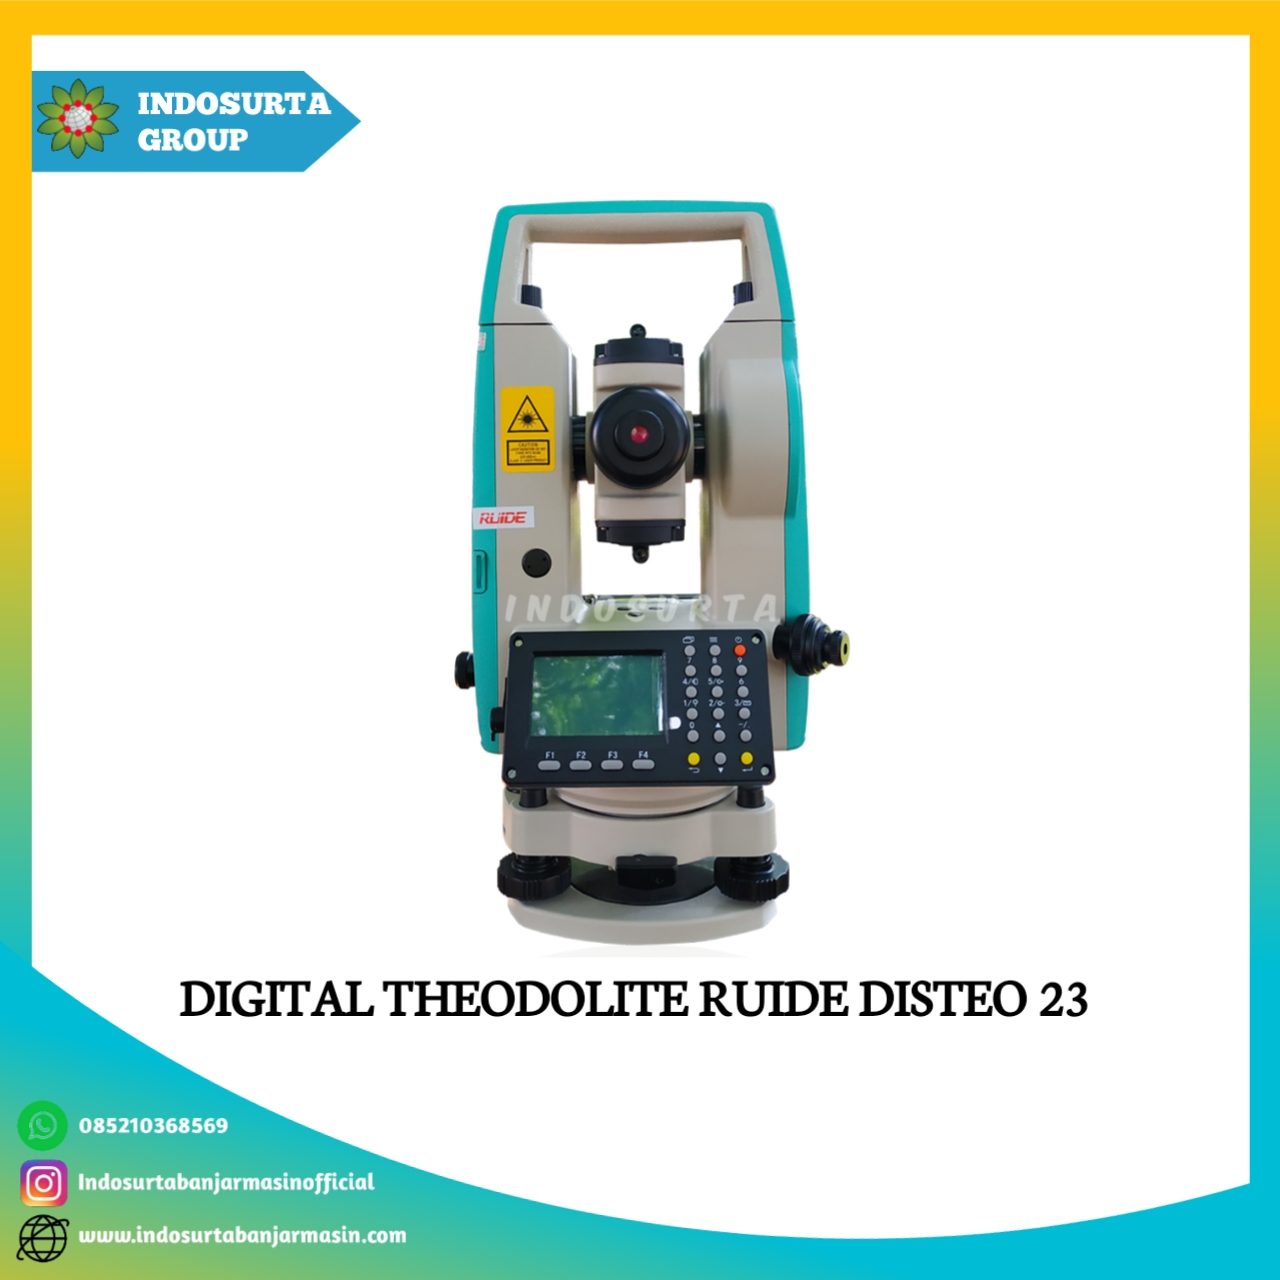 Digital Theodolite Ruide Disteo 23